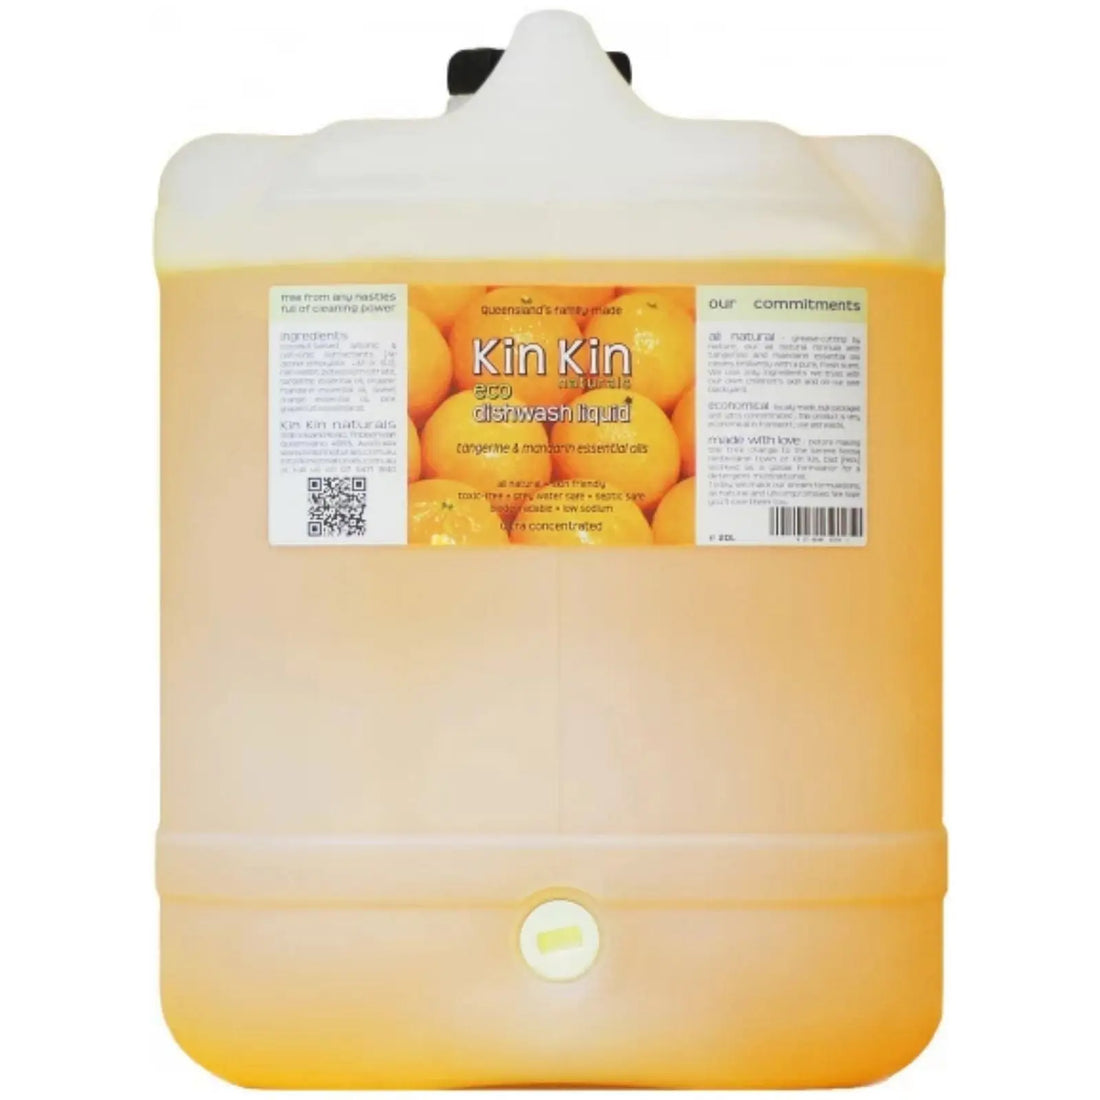 Dishwashing liquid Tangerine & Mandarin 20L-Household-Kin Kin Naturals-Sovereign Foods-Cleaning-Australian Made